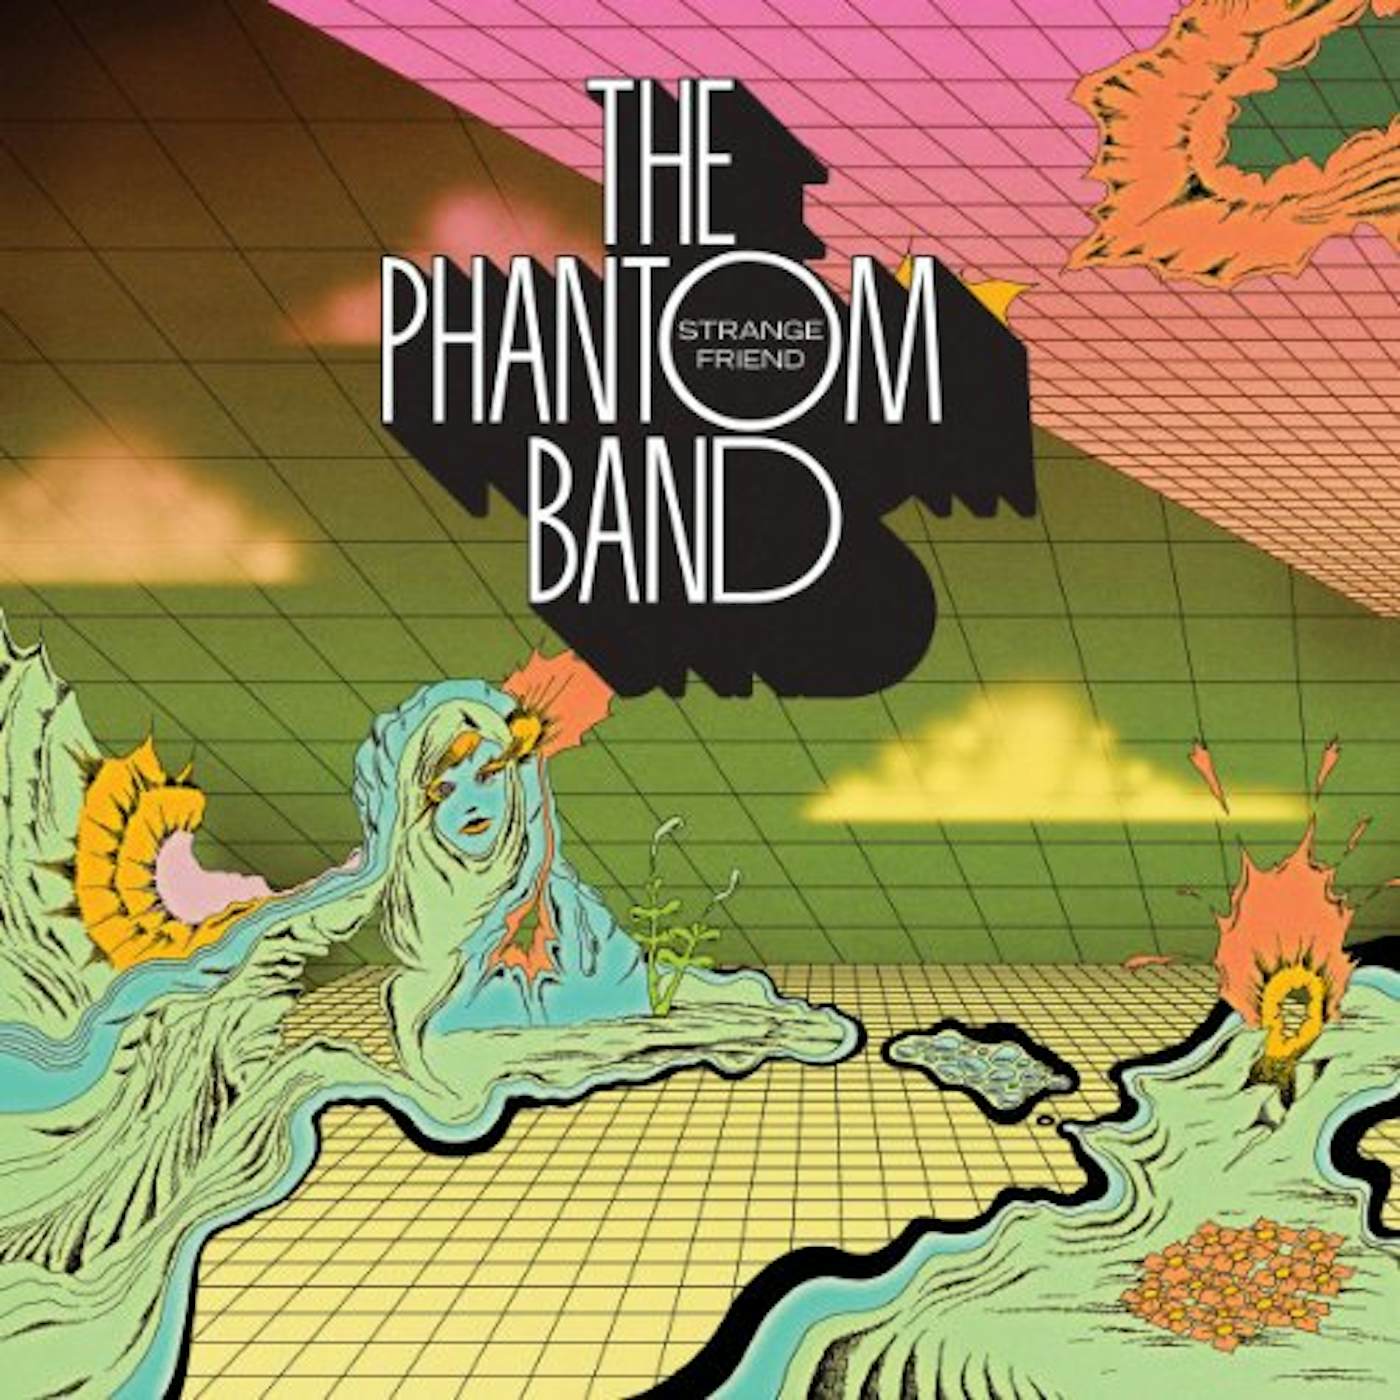 Phantom Band Strange Friend Vinyl Record